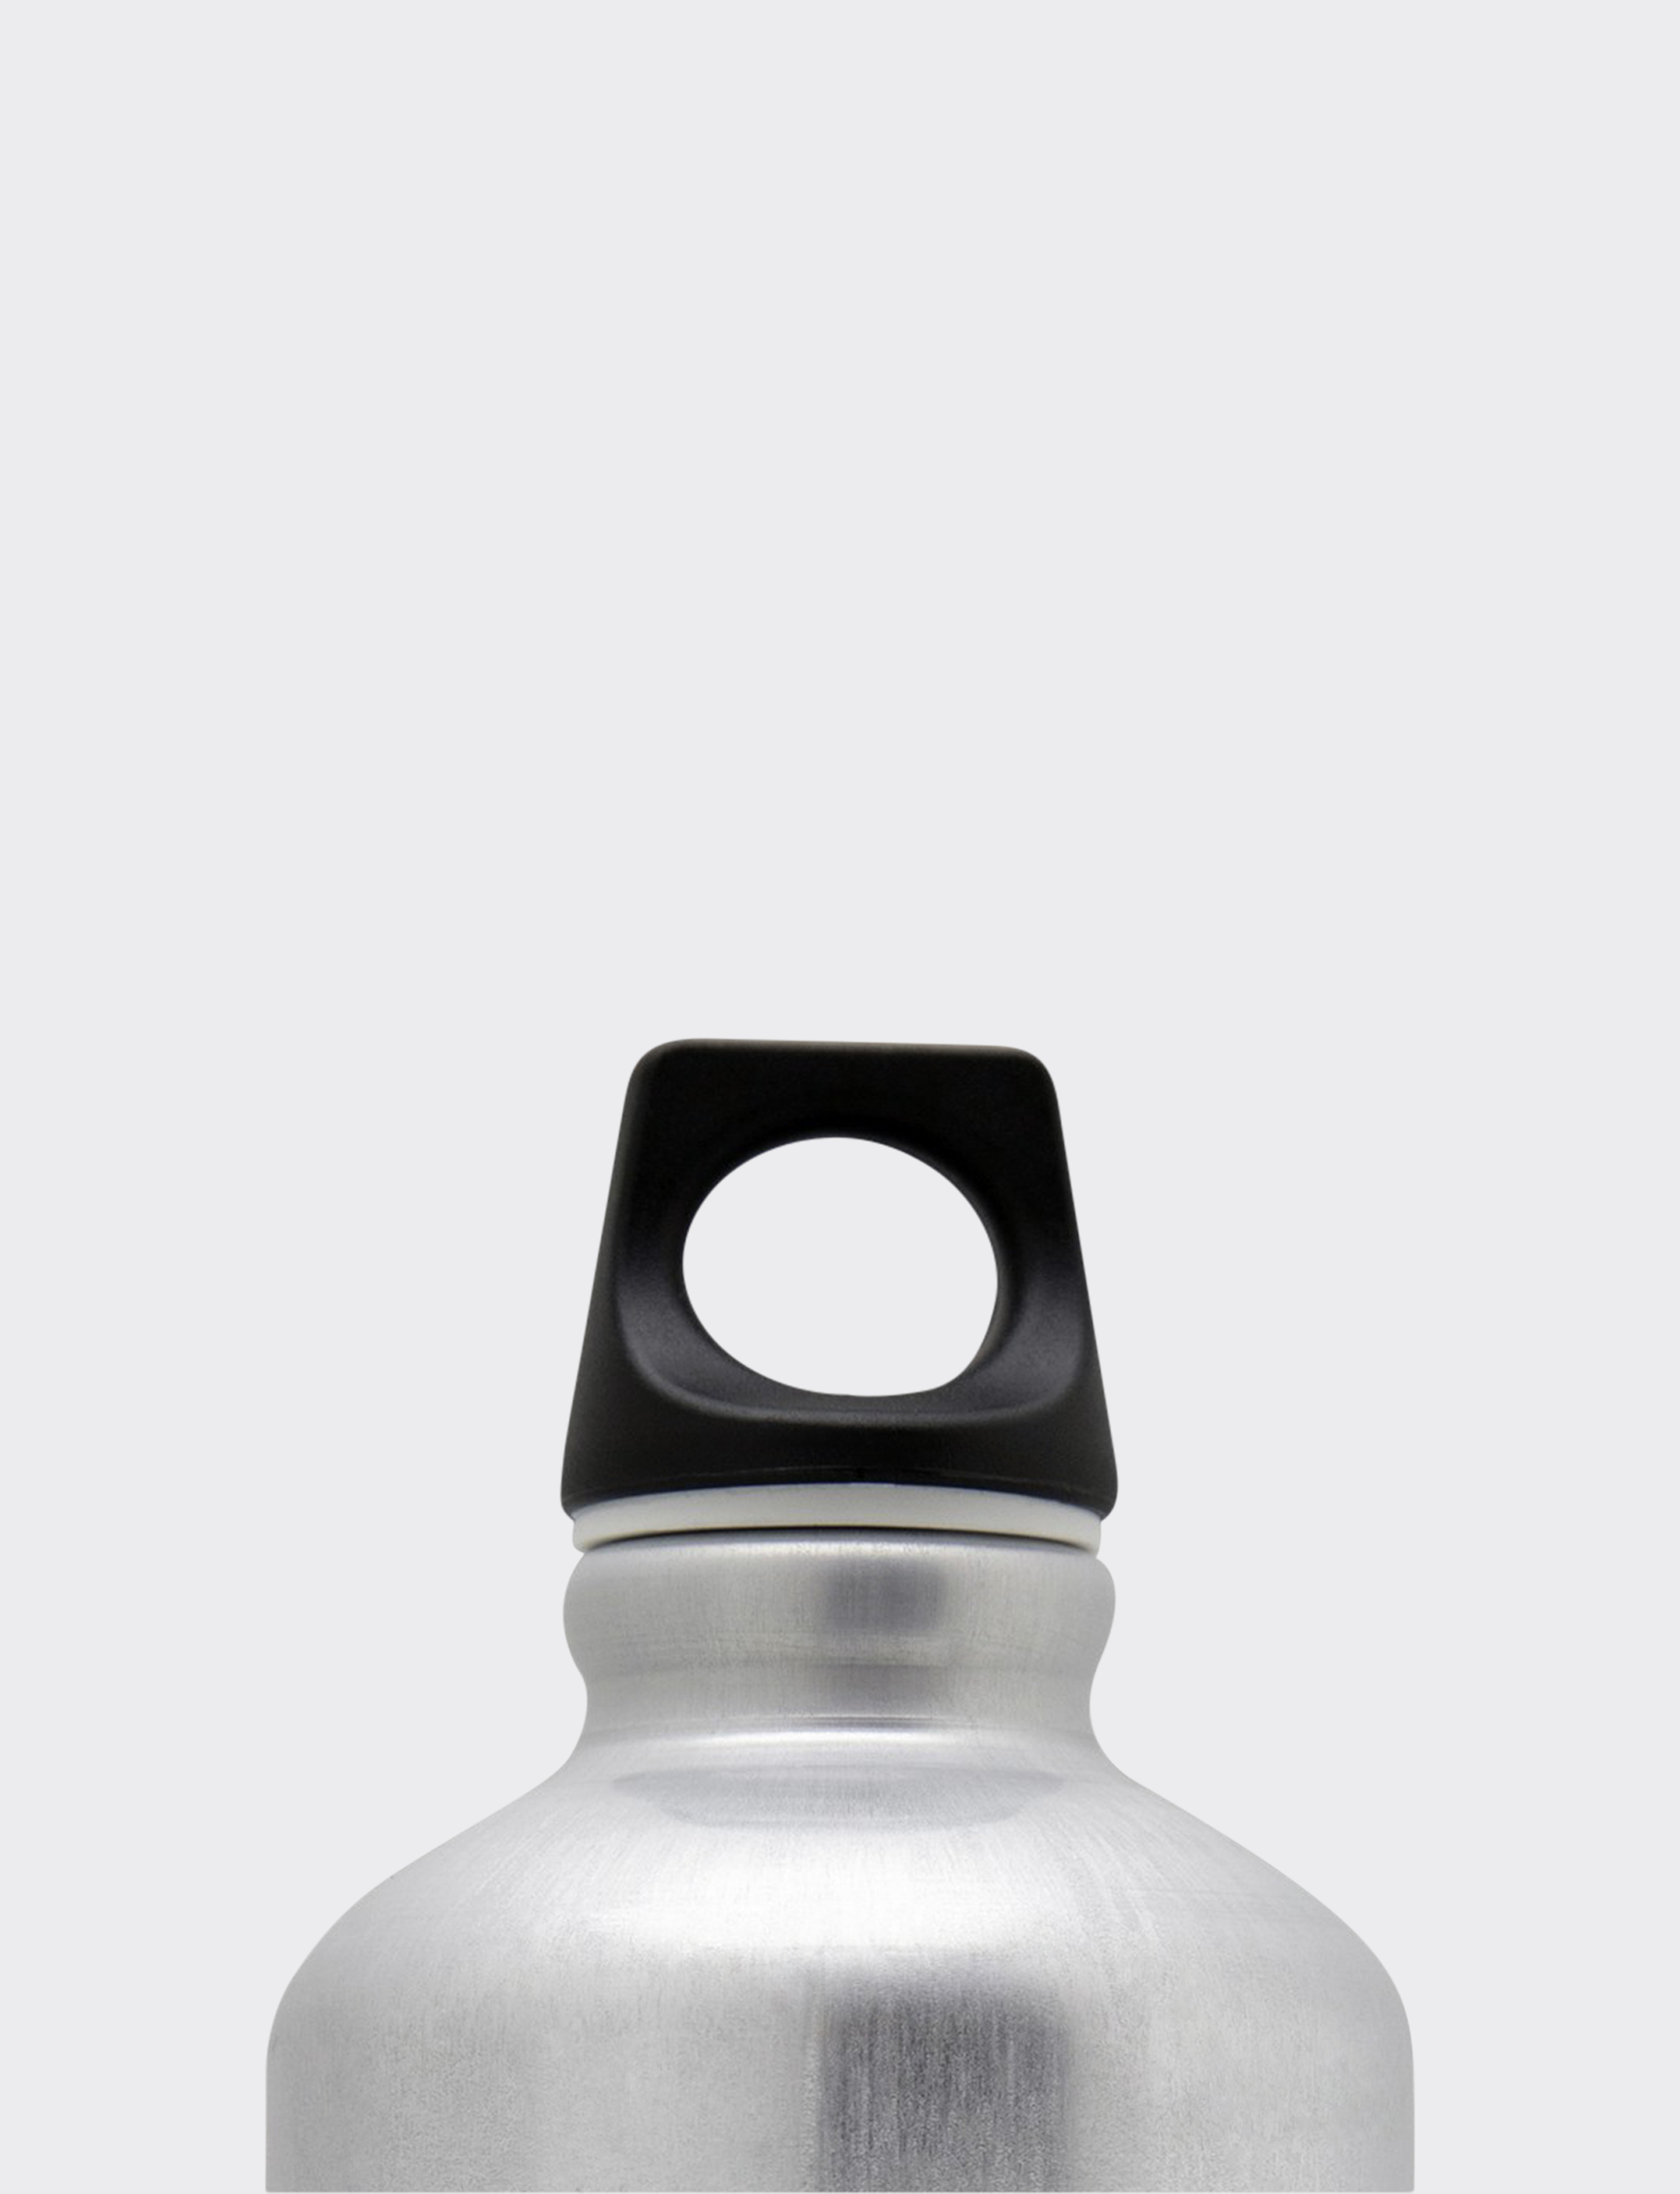 Recycled Aluminum Vandflaske